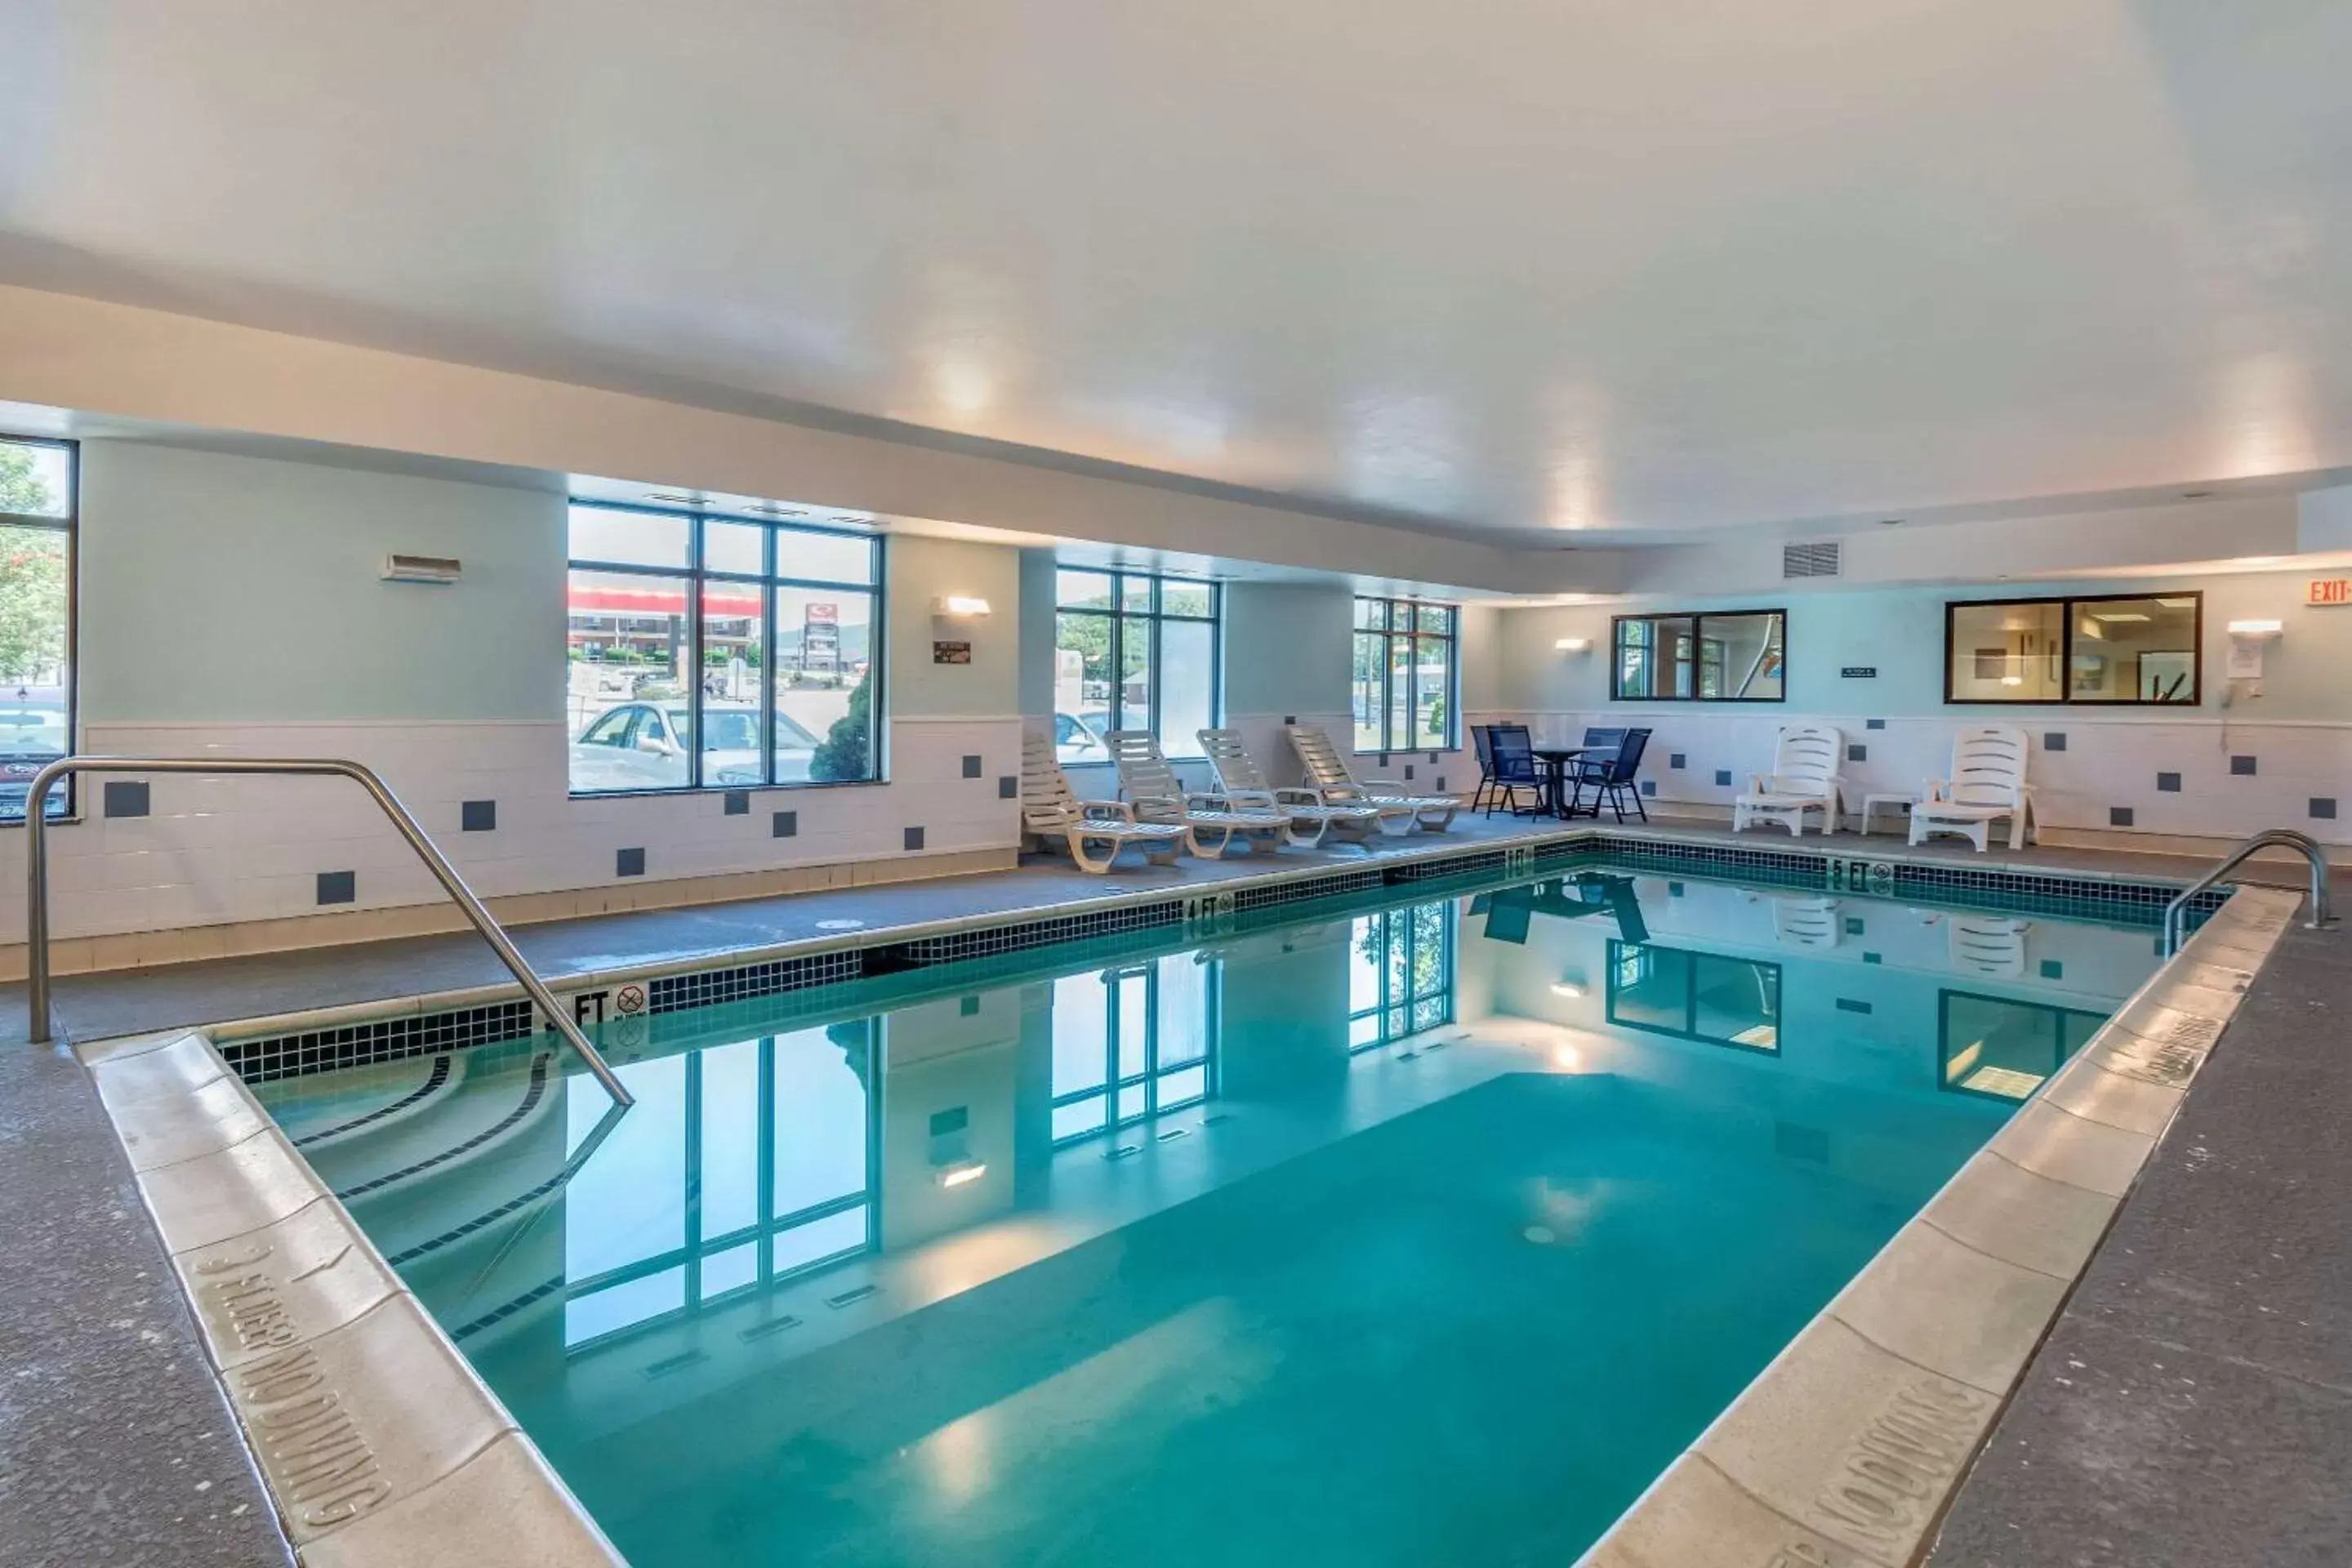 Swimming Pool in Comfort Inn Williamsport